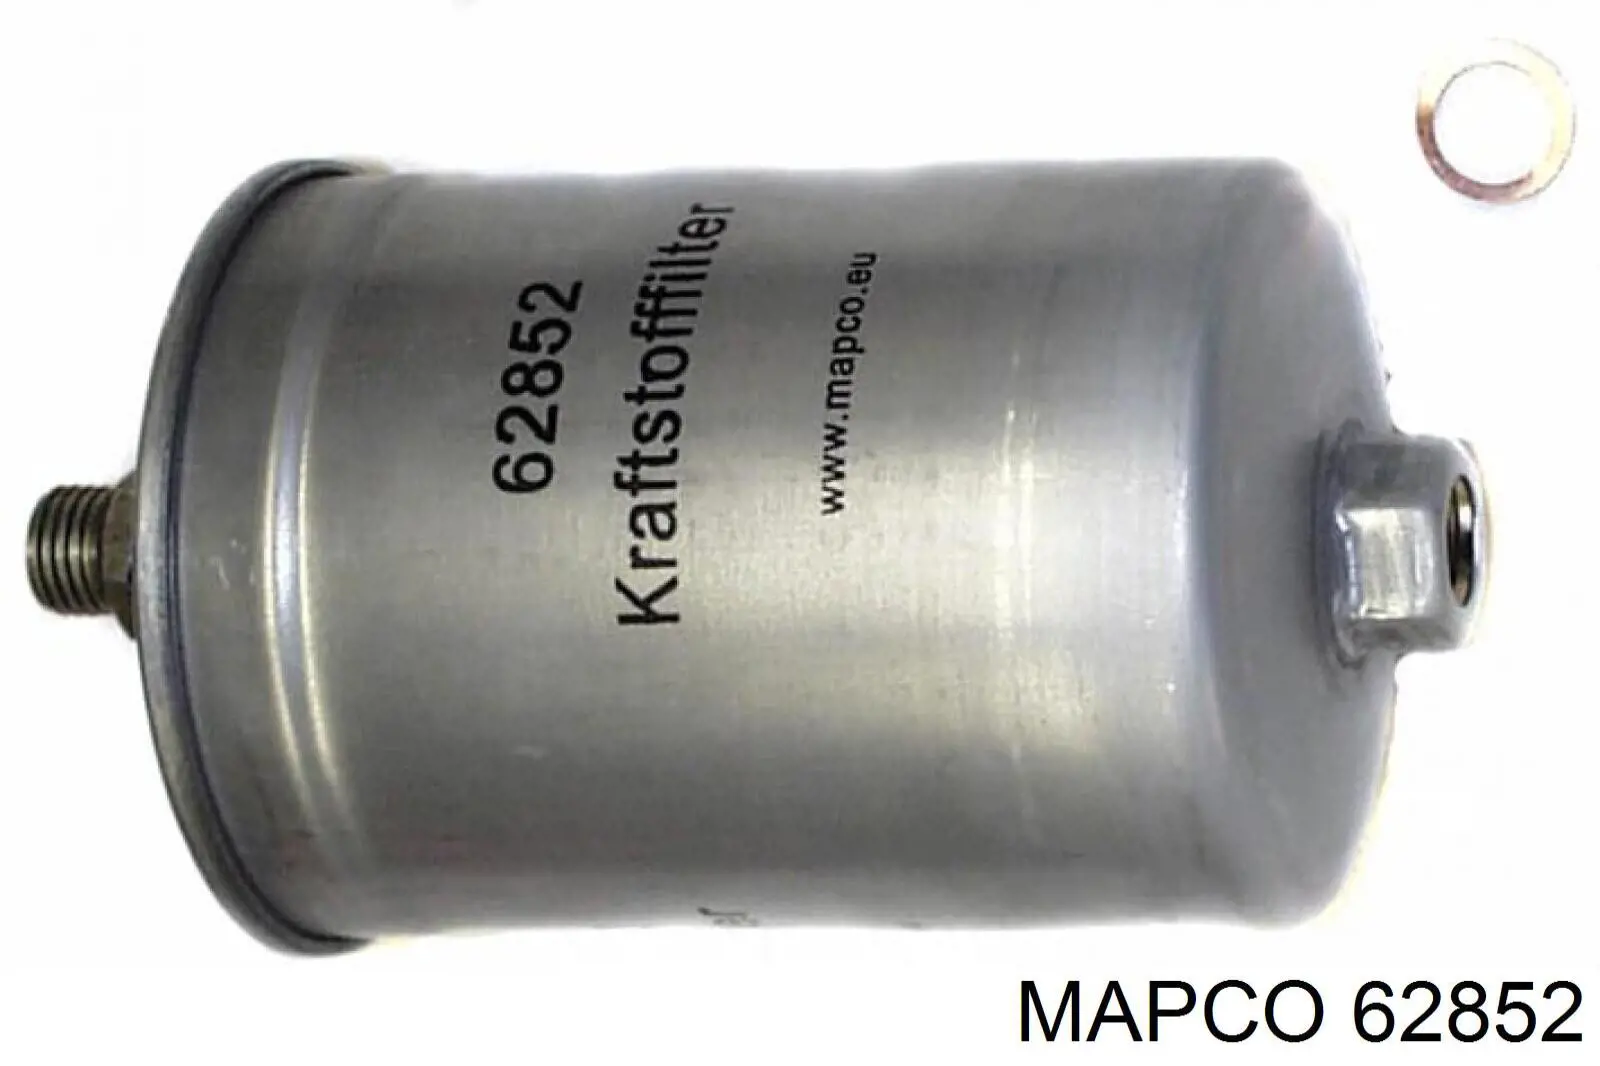 62852 Mapco filtro combustible